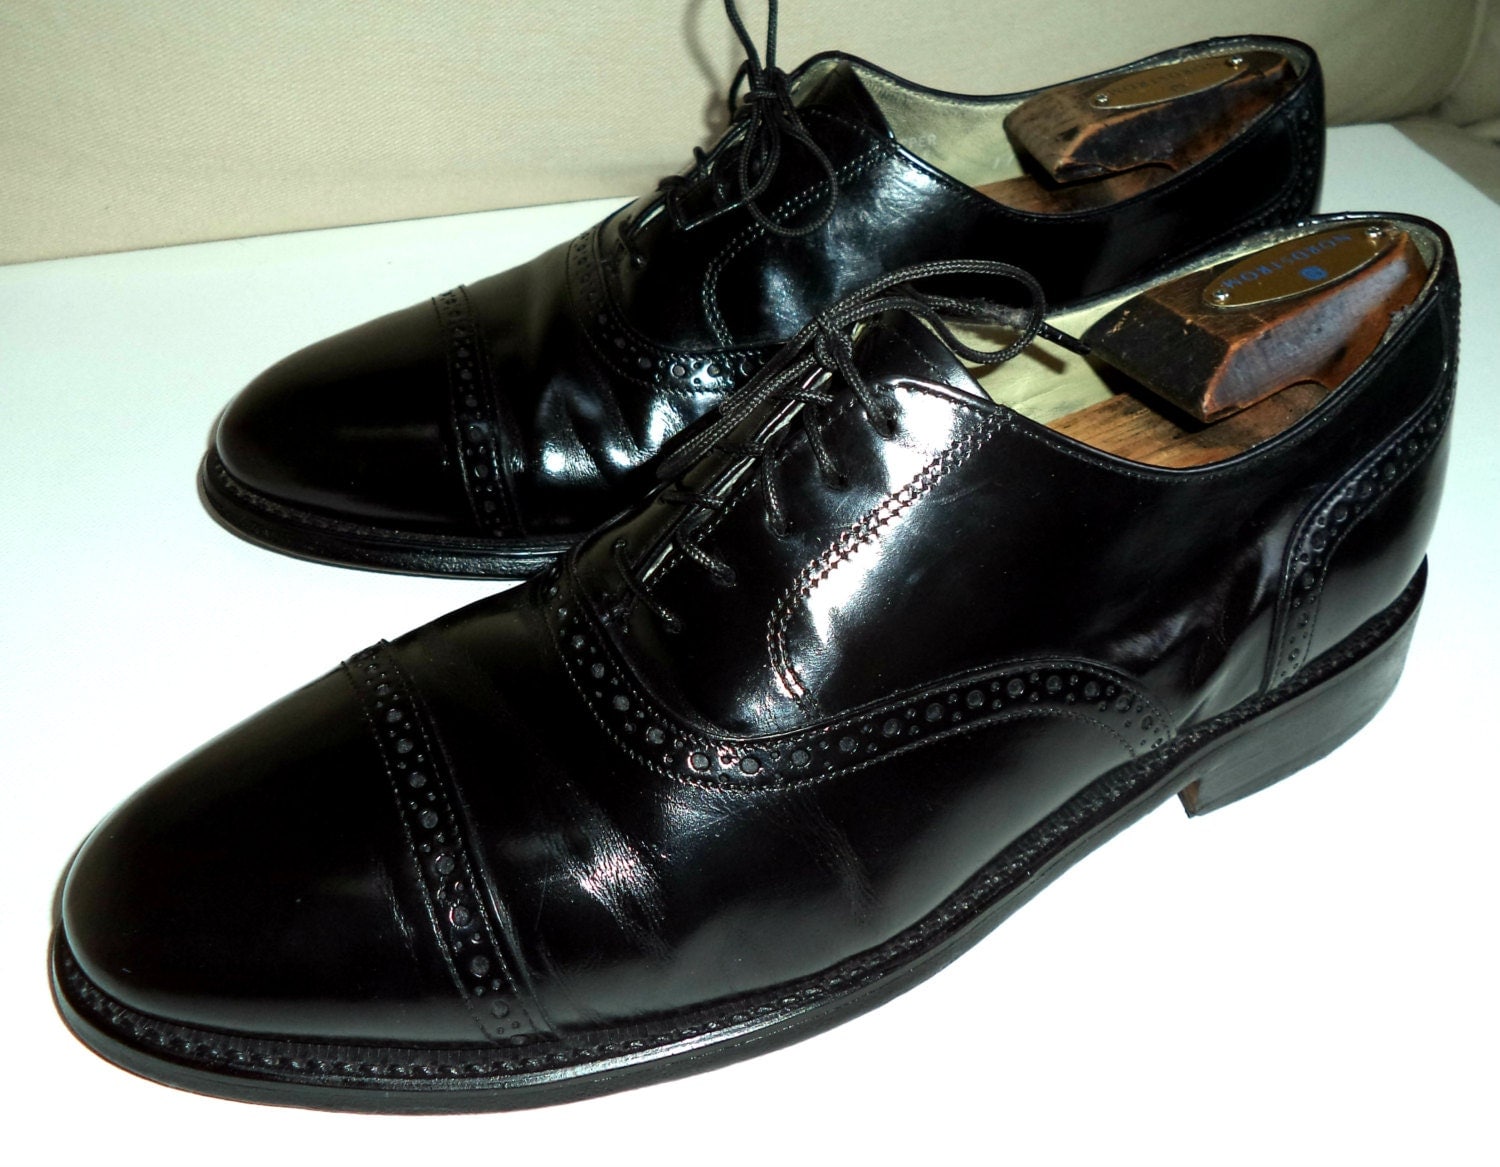 SALE Men's Size 9 BOSTONIAN Shoes Black Dress Classic